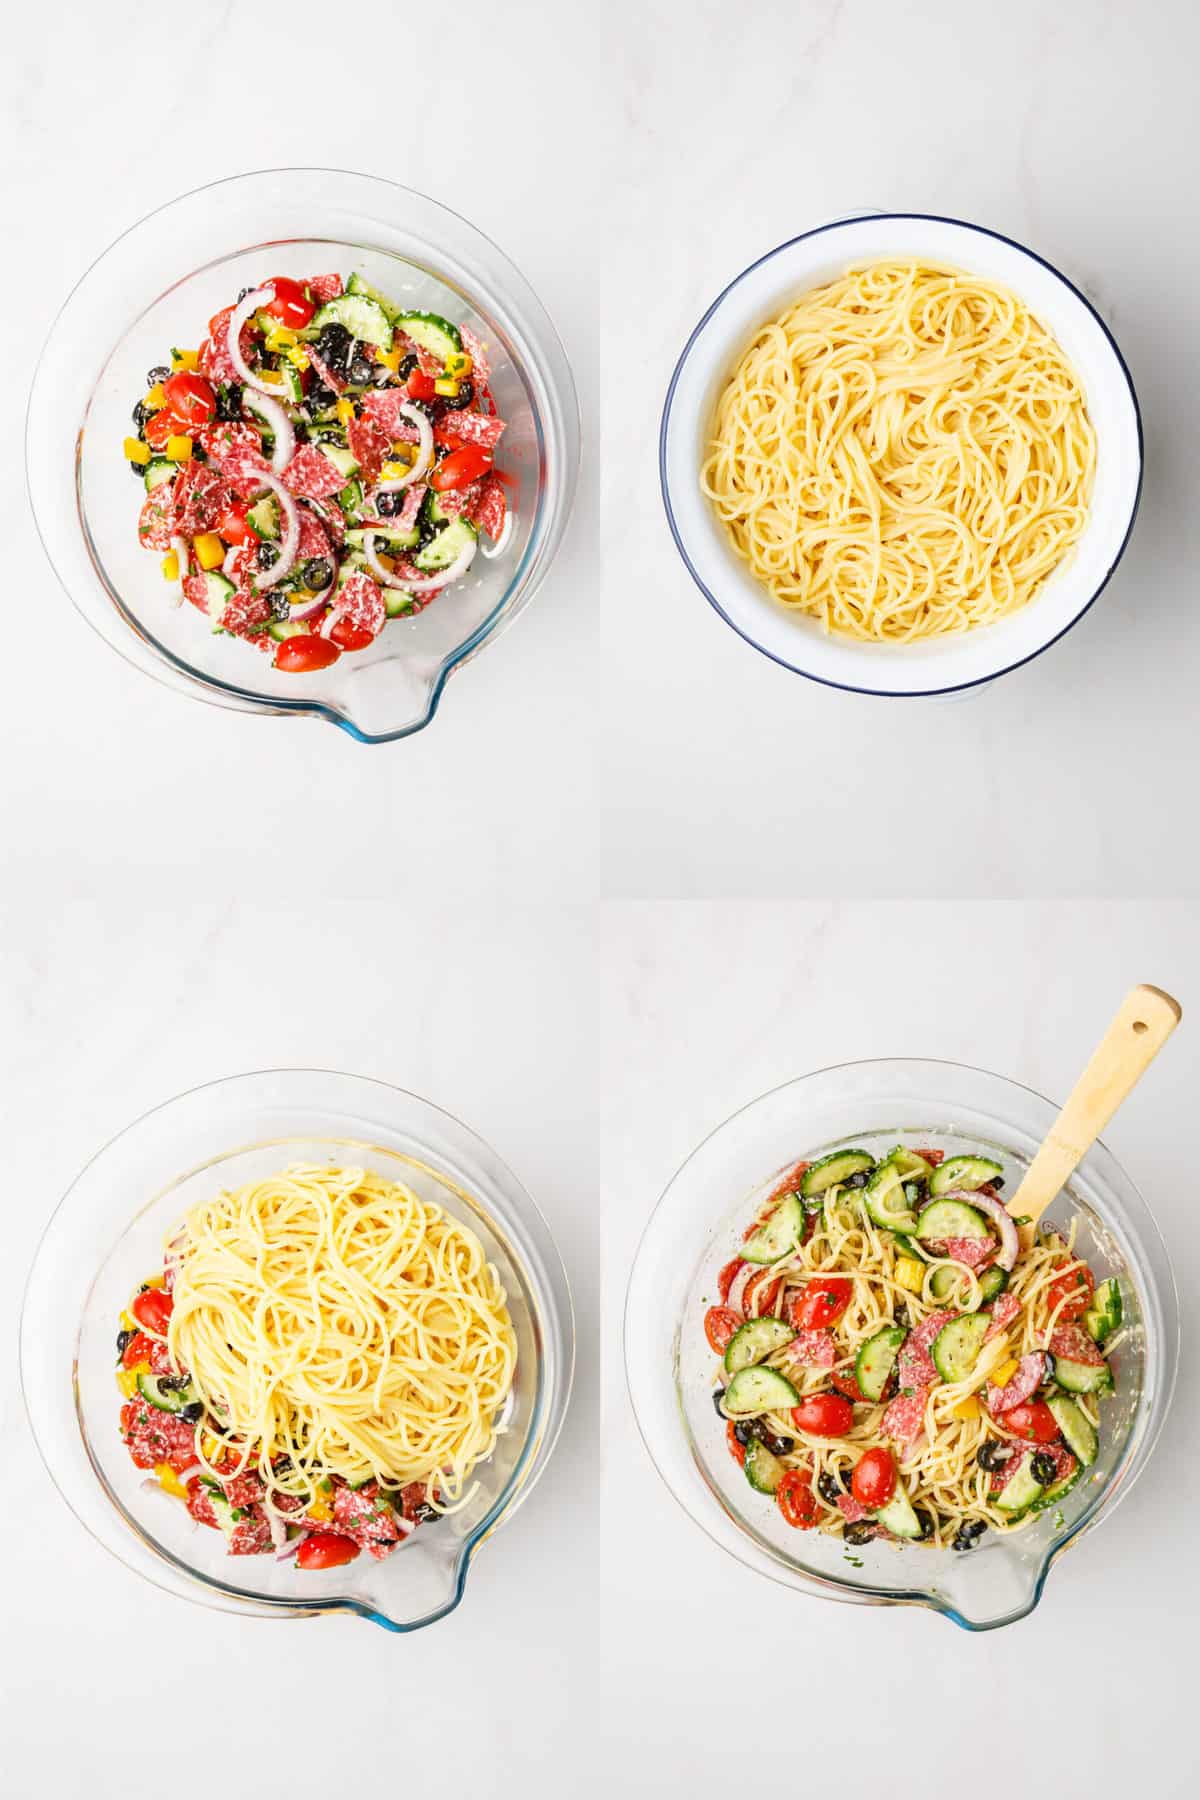 steps to make spaghetti salad